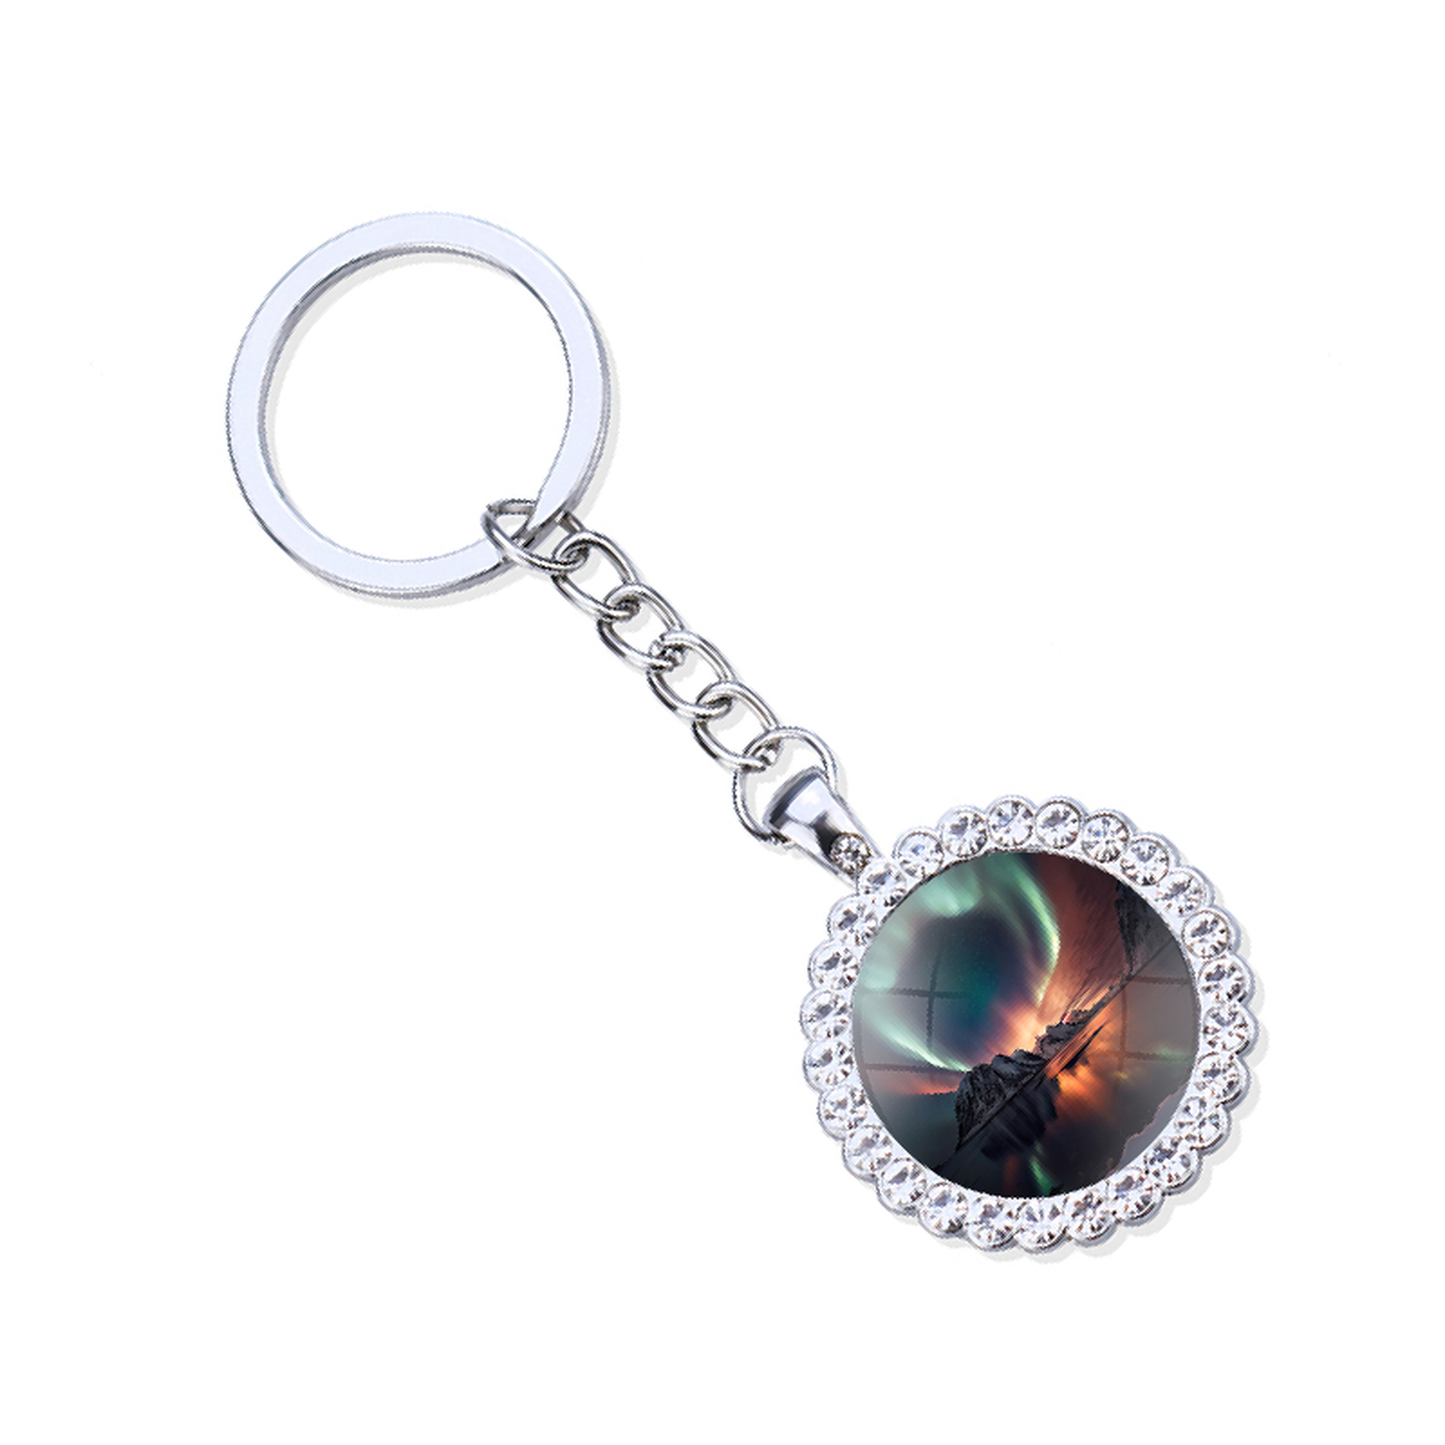 Aurora Borealis Silver Keyring - Northern Light Jewelry - Rhinestones Glass Key Chain - Perfect Aurora Lovers Gift 16